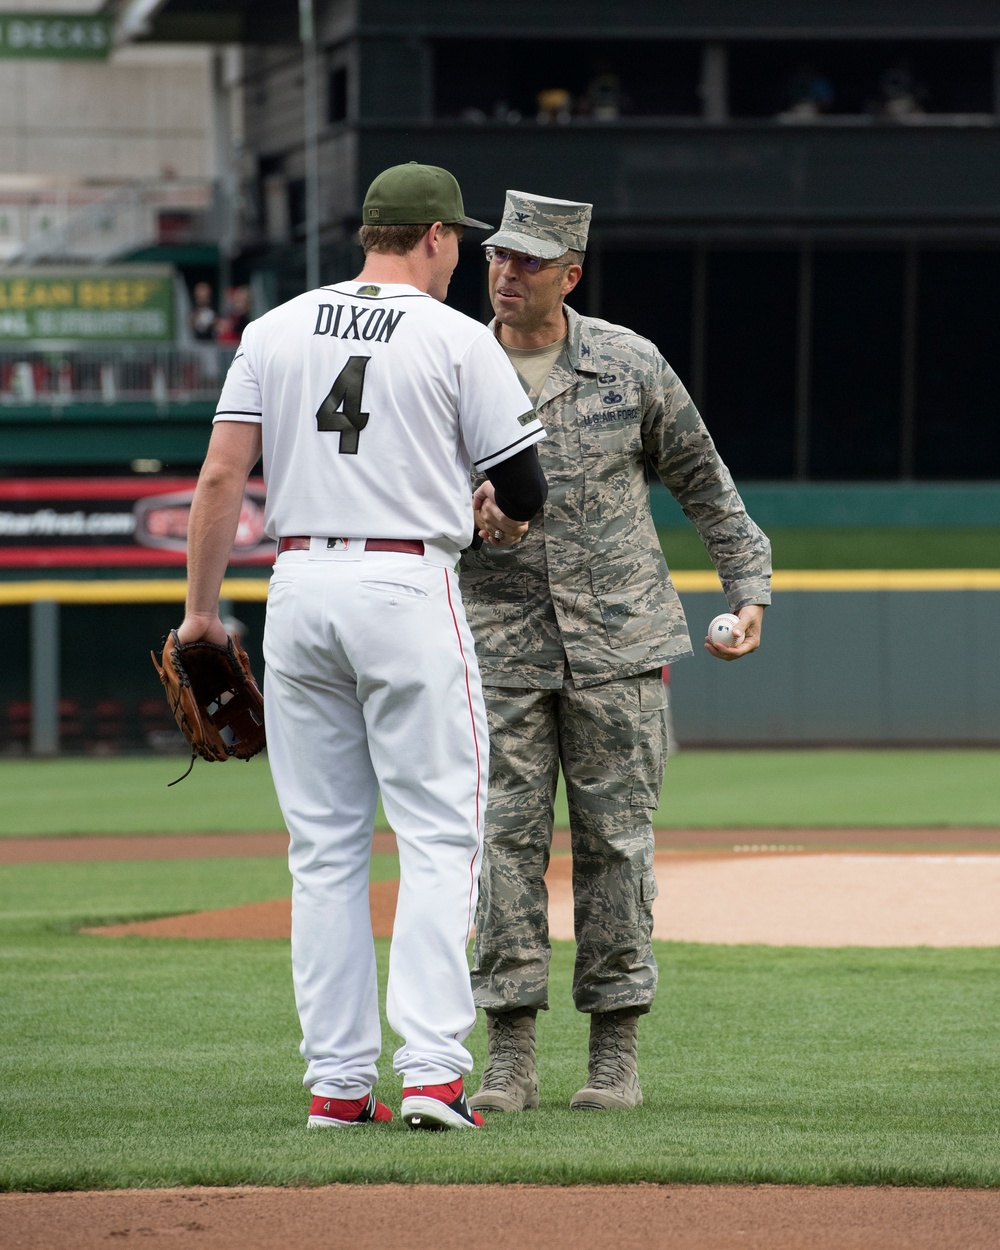 DVIDS - Images - Cincinnati Reds baseball team recognize military service  [Image 5 of 9]